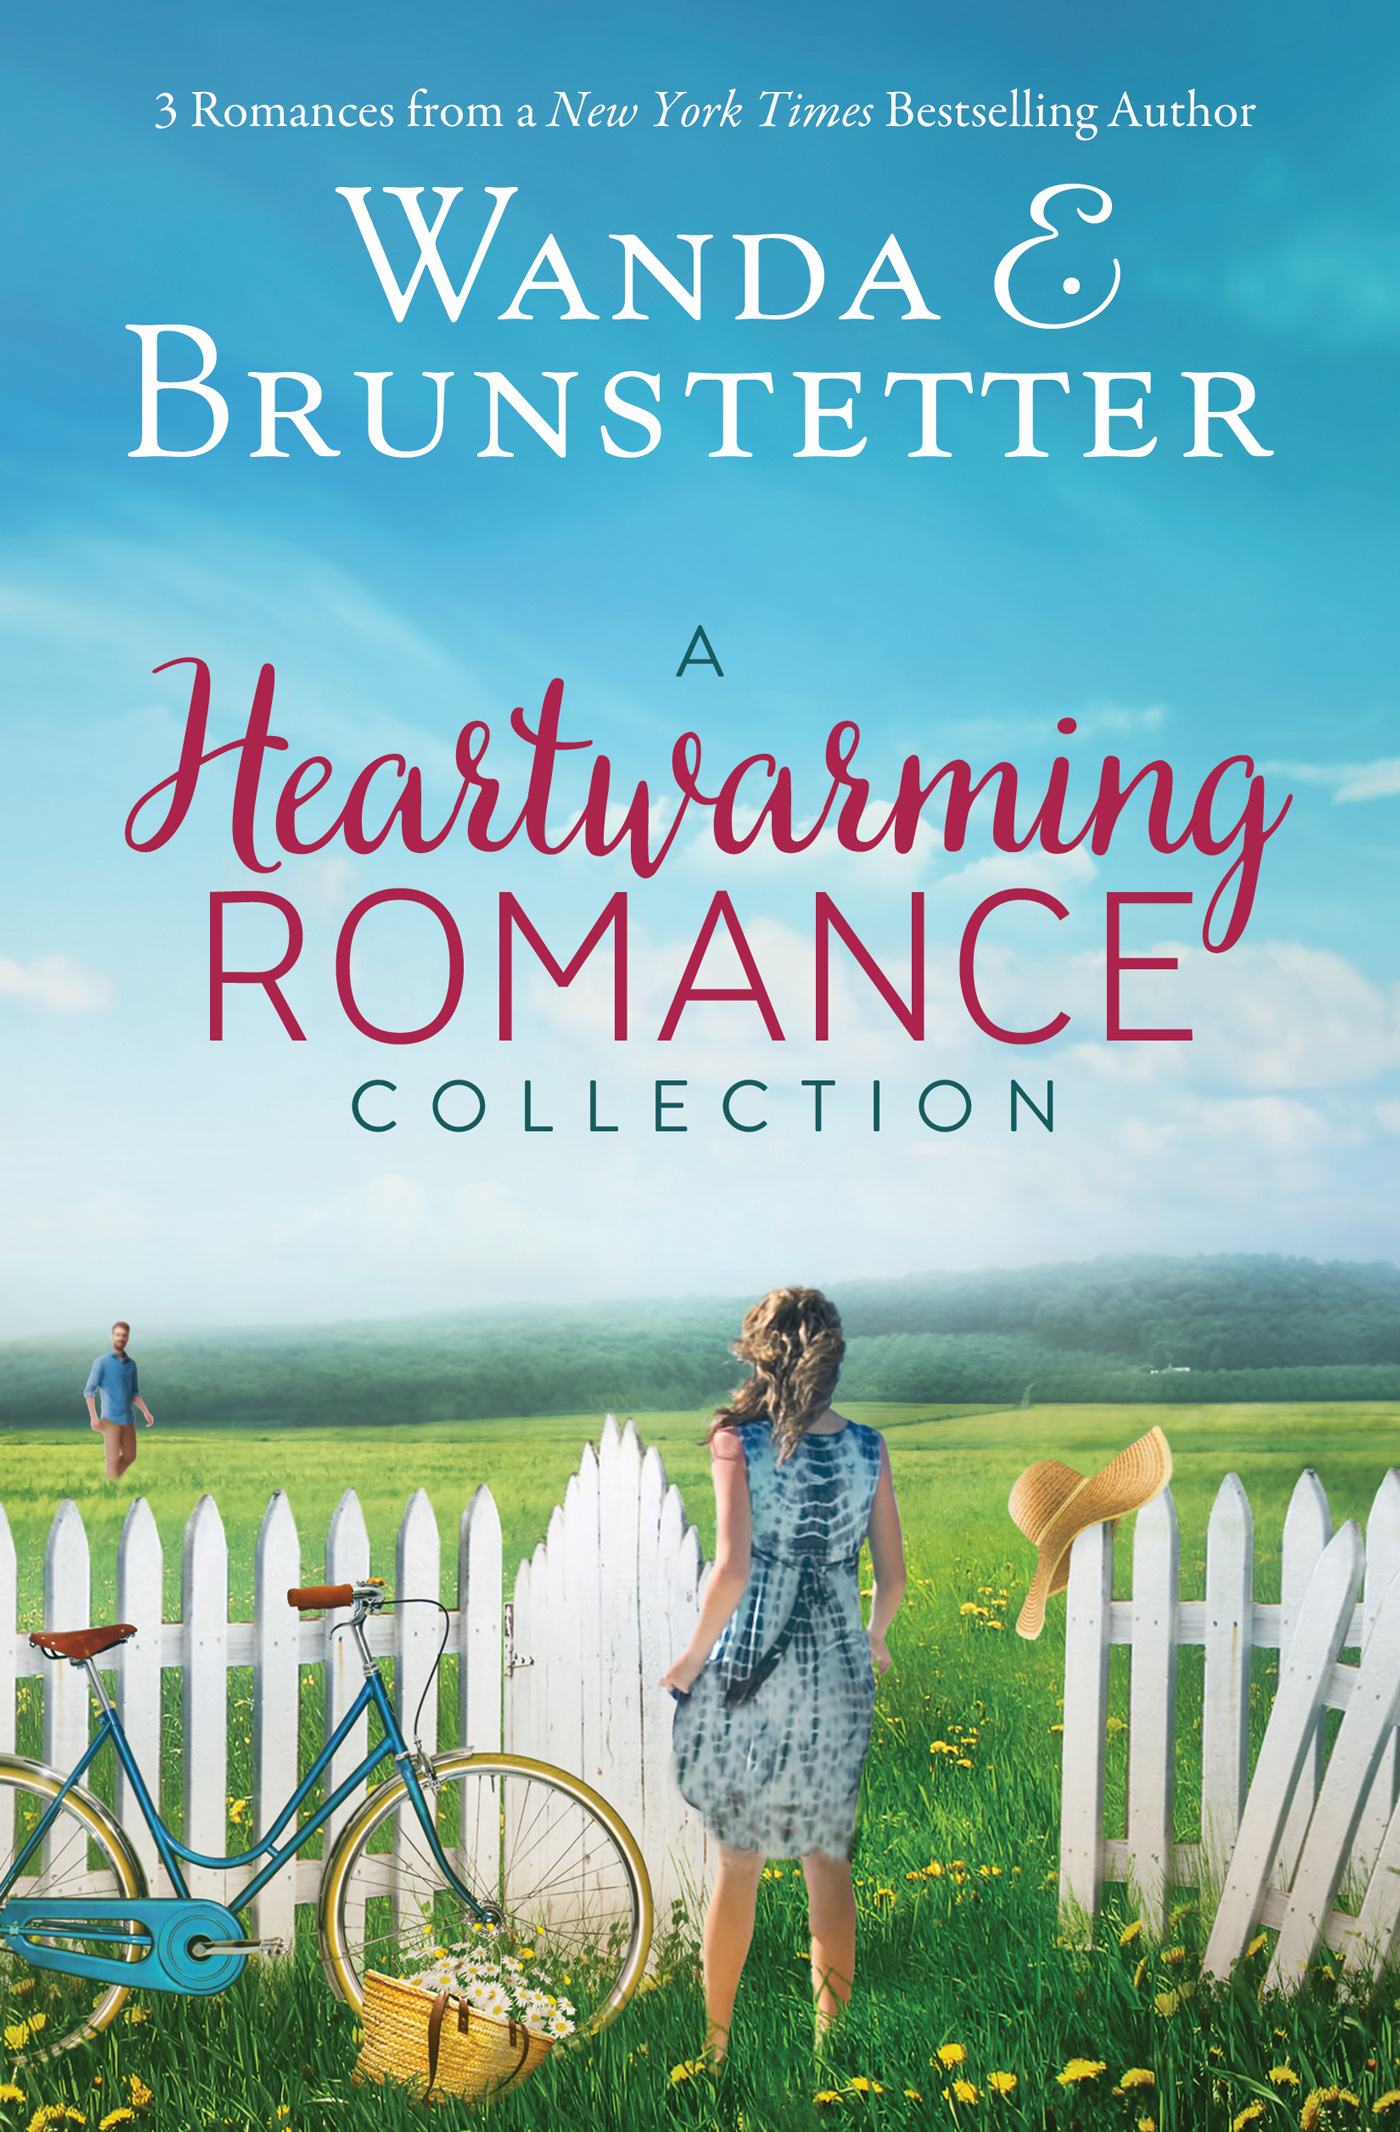 Heartwarming Romance Collection By Wanda E Brunstetter (Paperback)